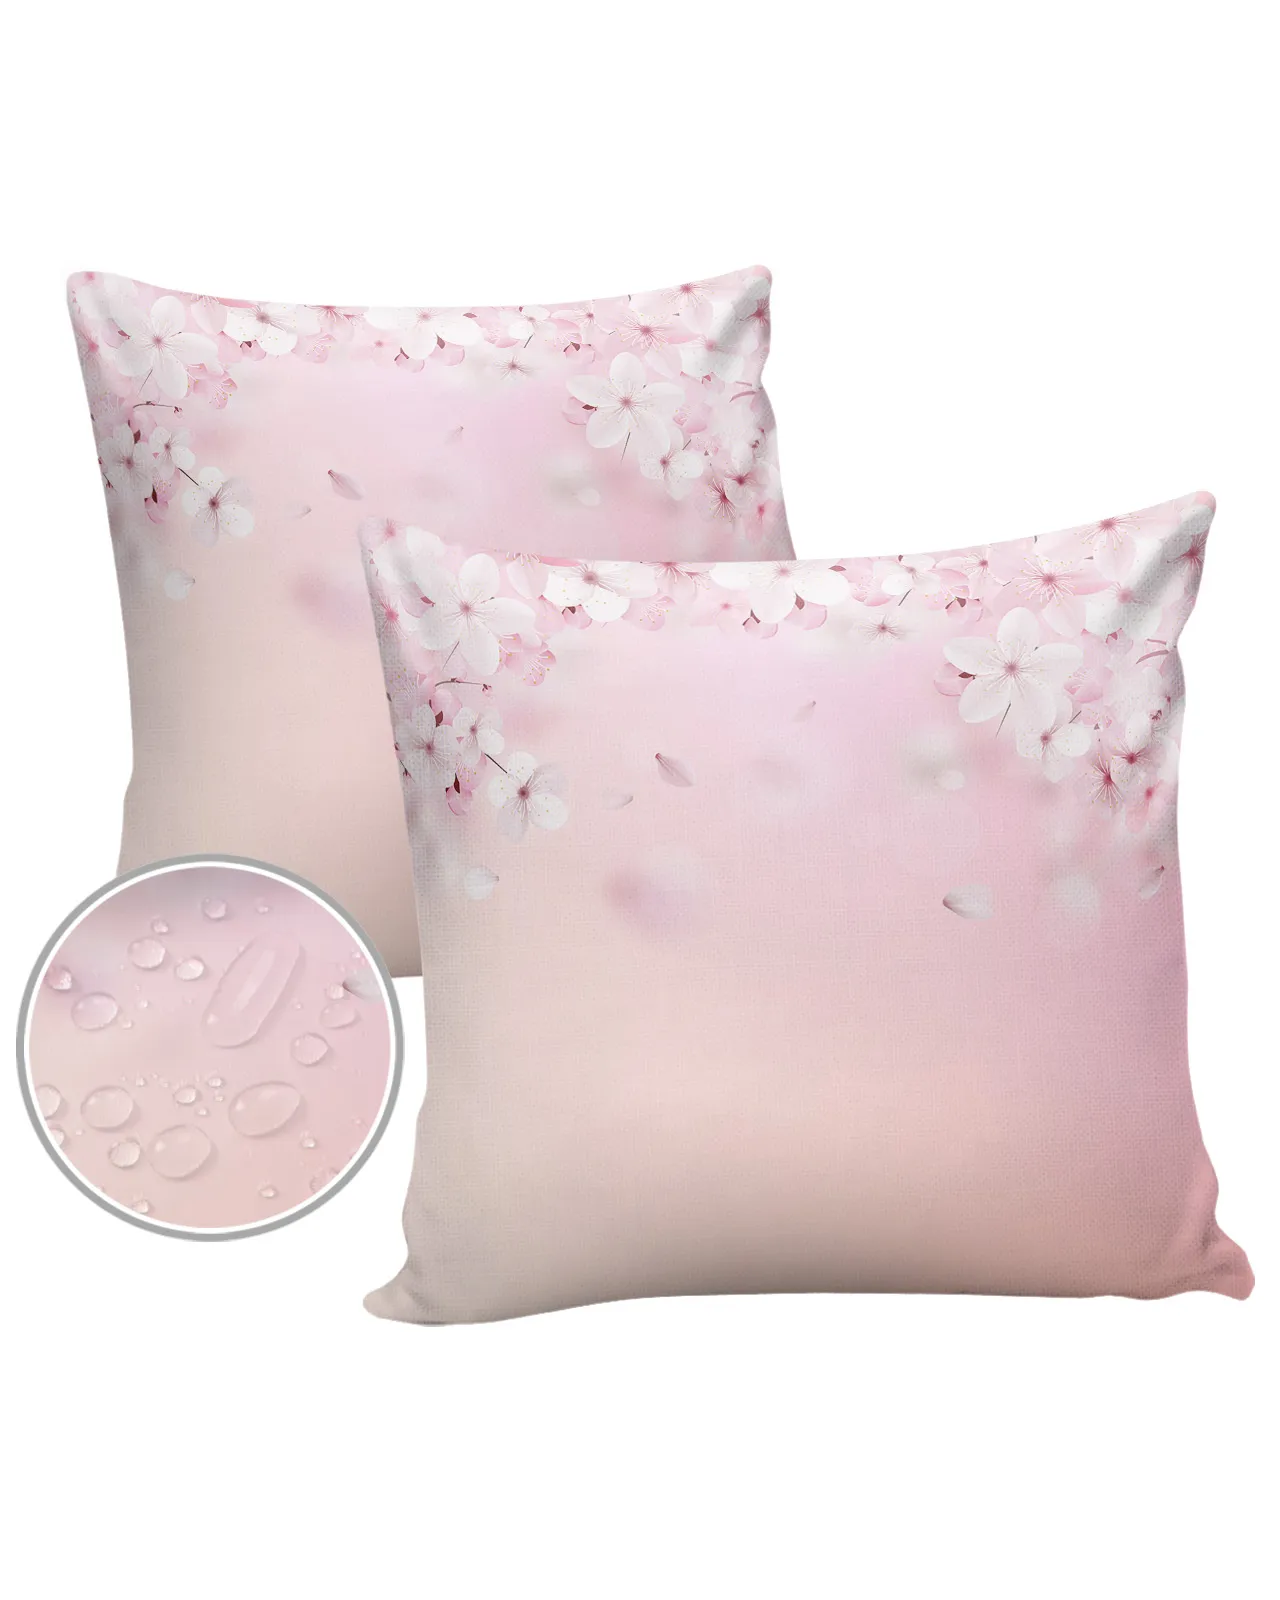 2/4pcs Waterproof Colowcase Flowcase Flower Flower Blossom Pink Cherry Cushions Cuscine